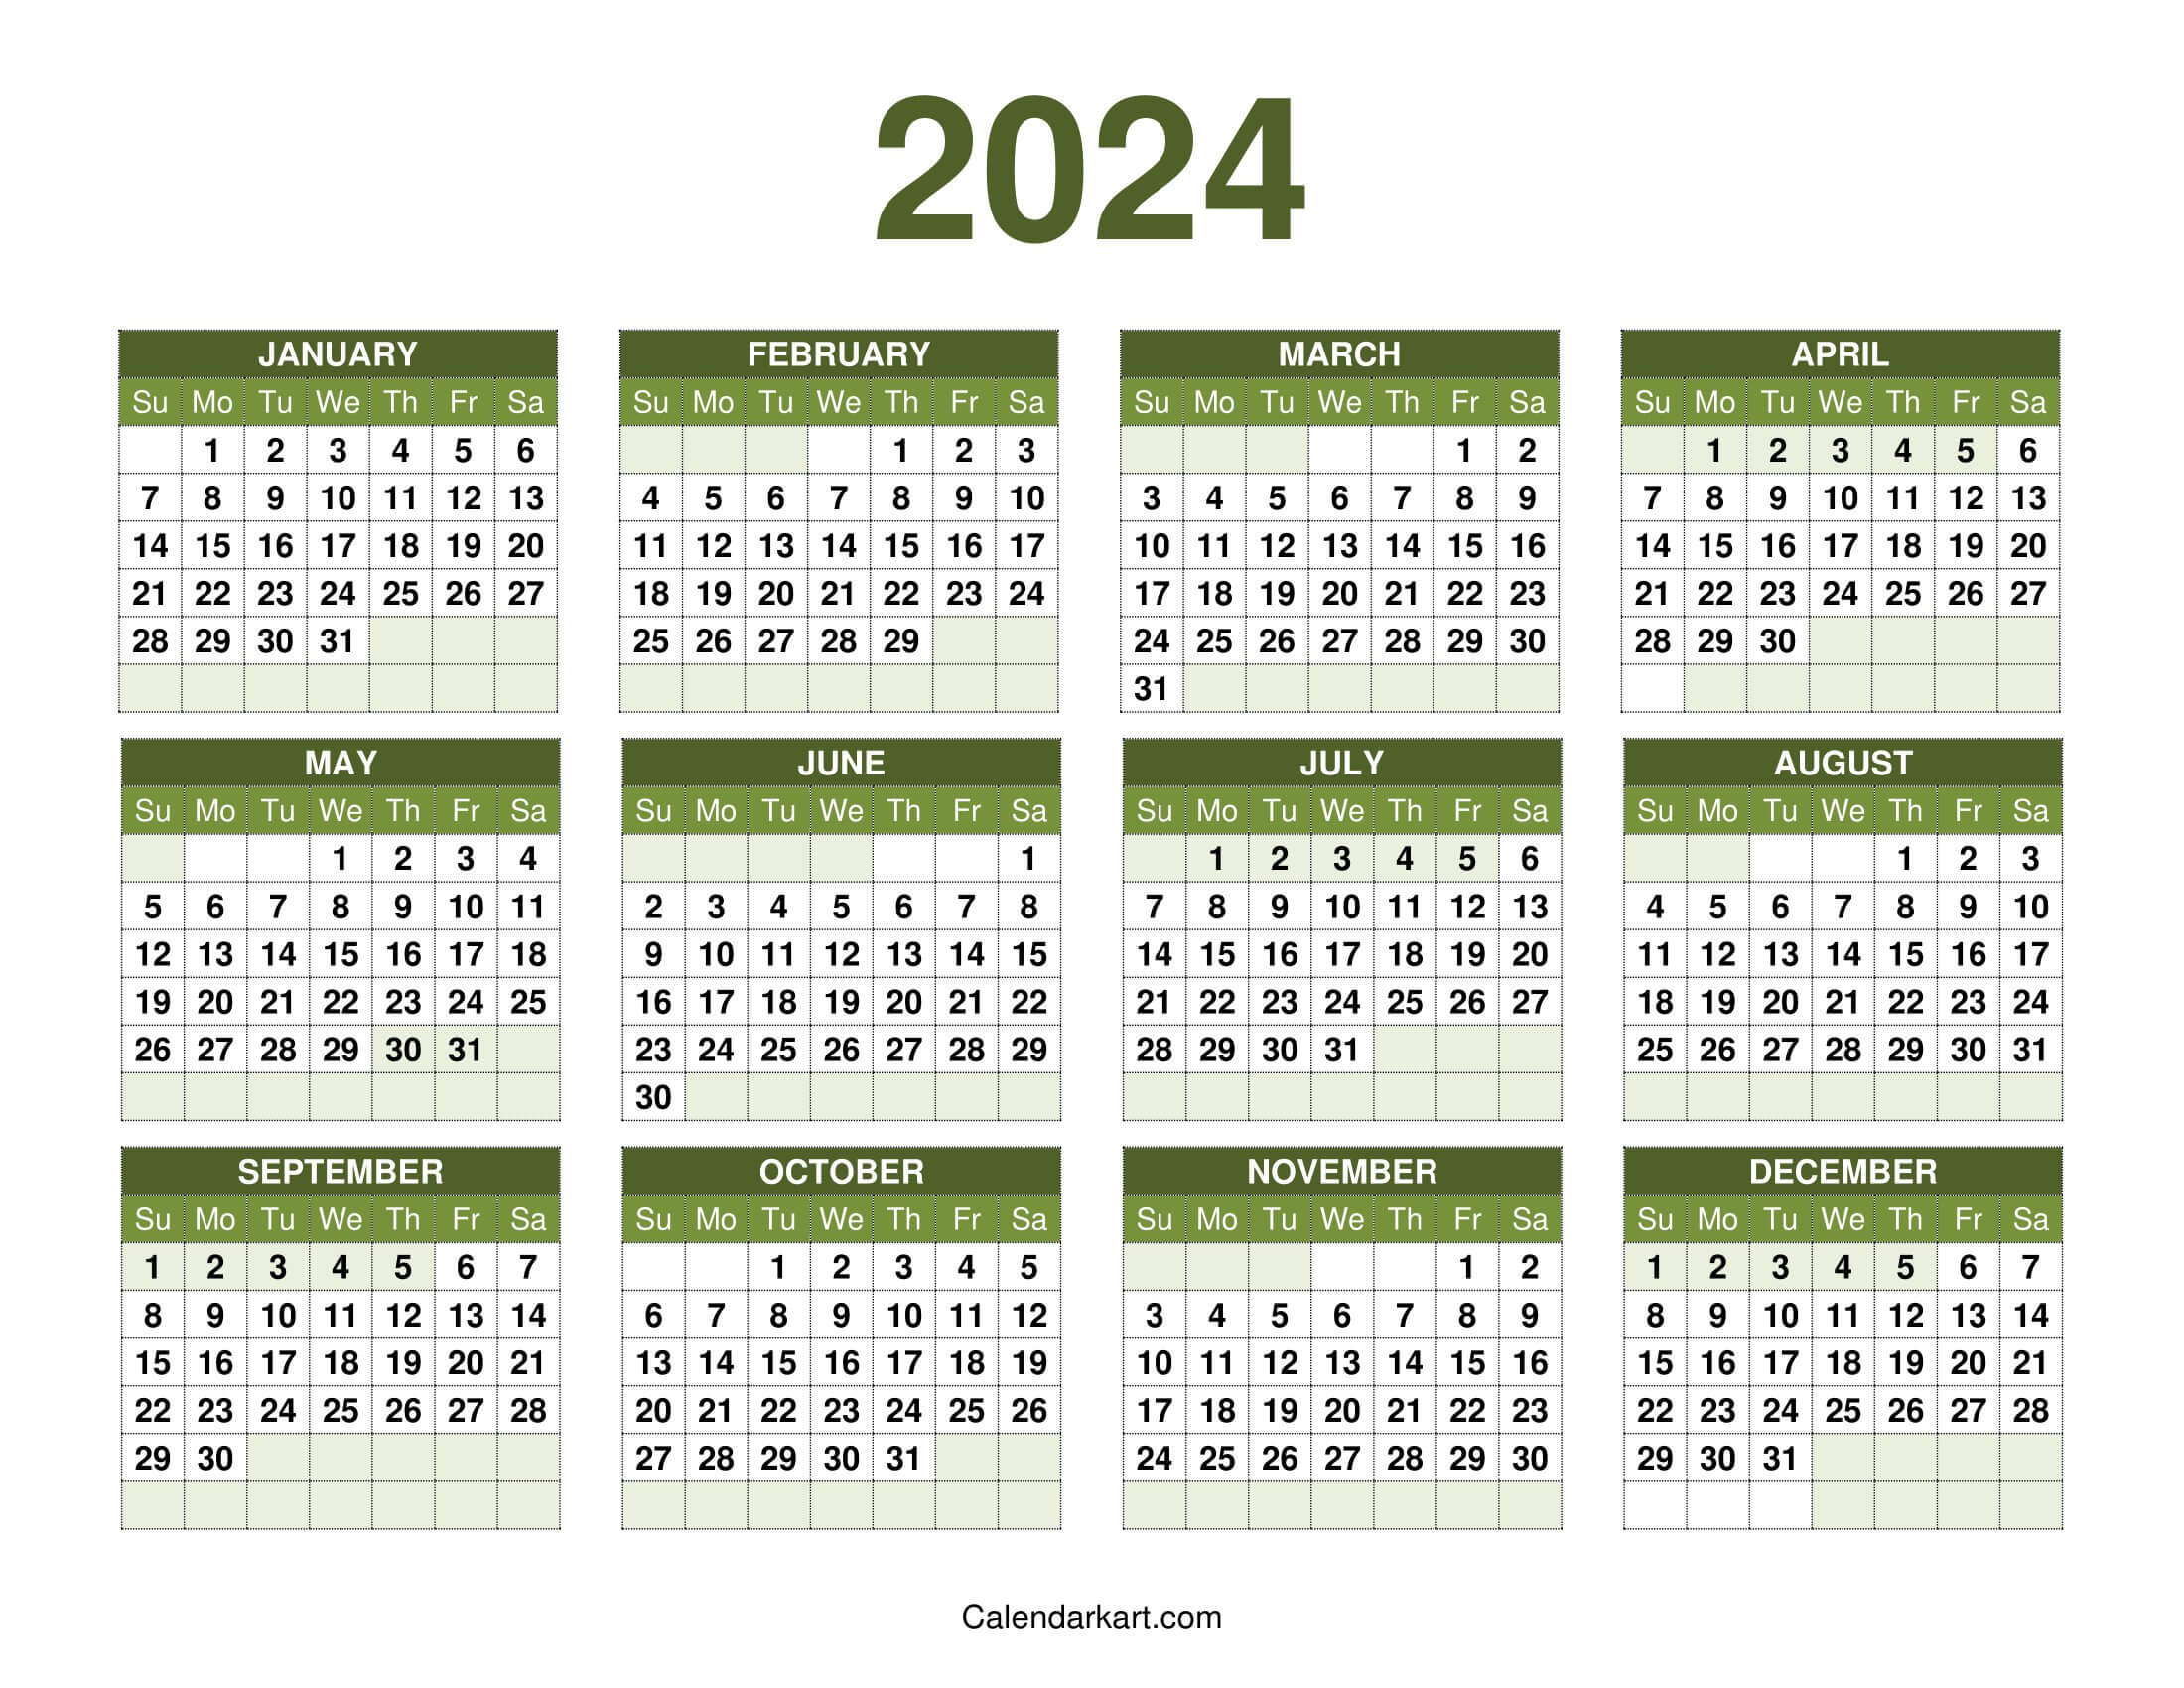 Free Printable Year At A Glance Calendar 2023-2024 - Calendarkart | Calendar 2024 To Print